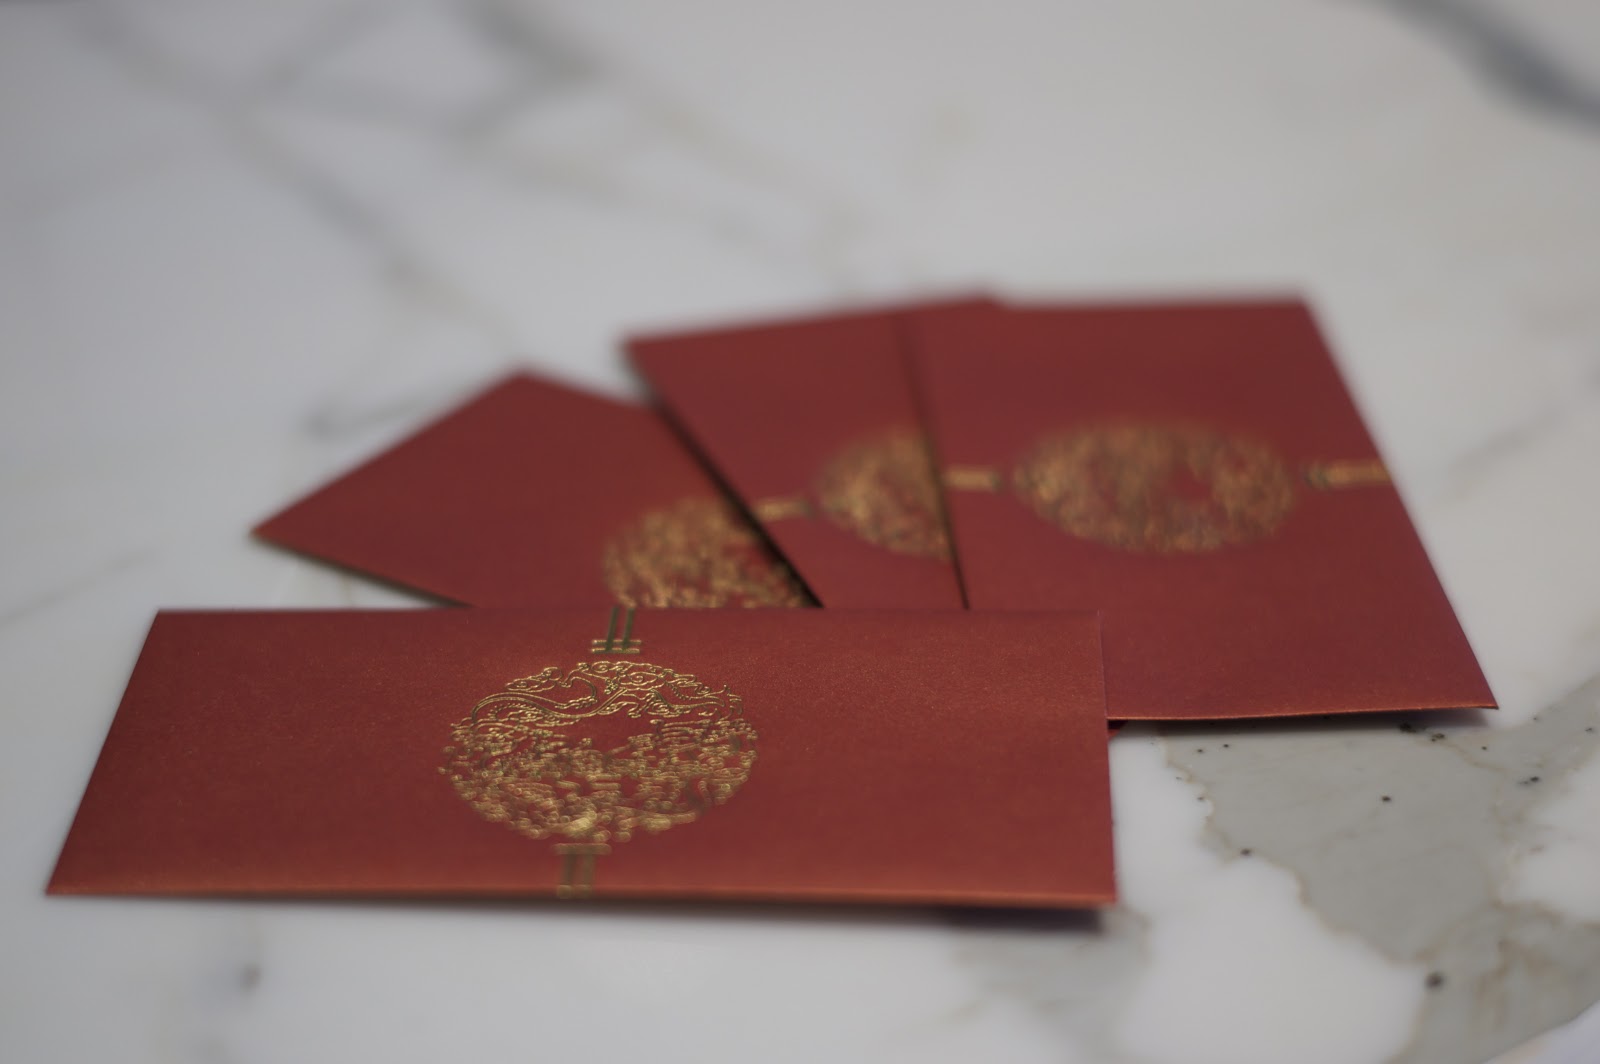 Kpop Lunar New Year Red Envelopes Li Xi Hong Bao 